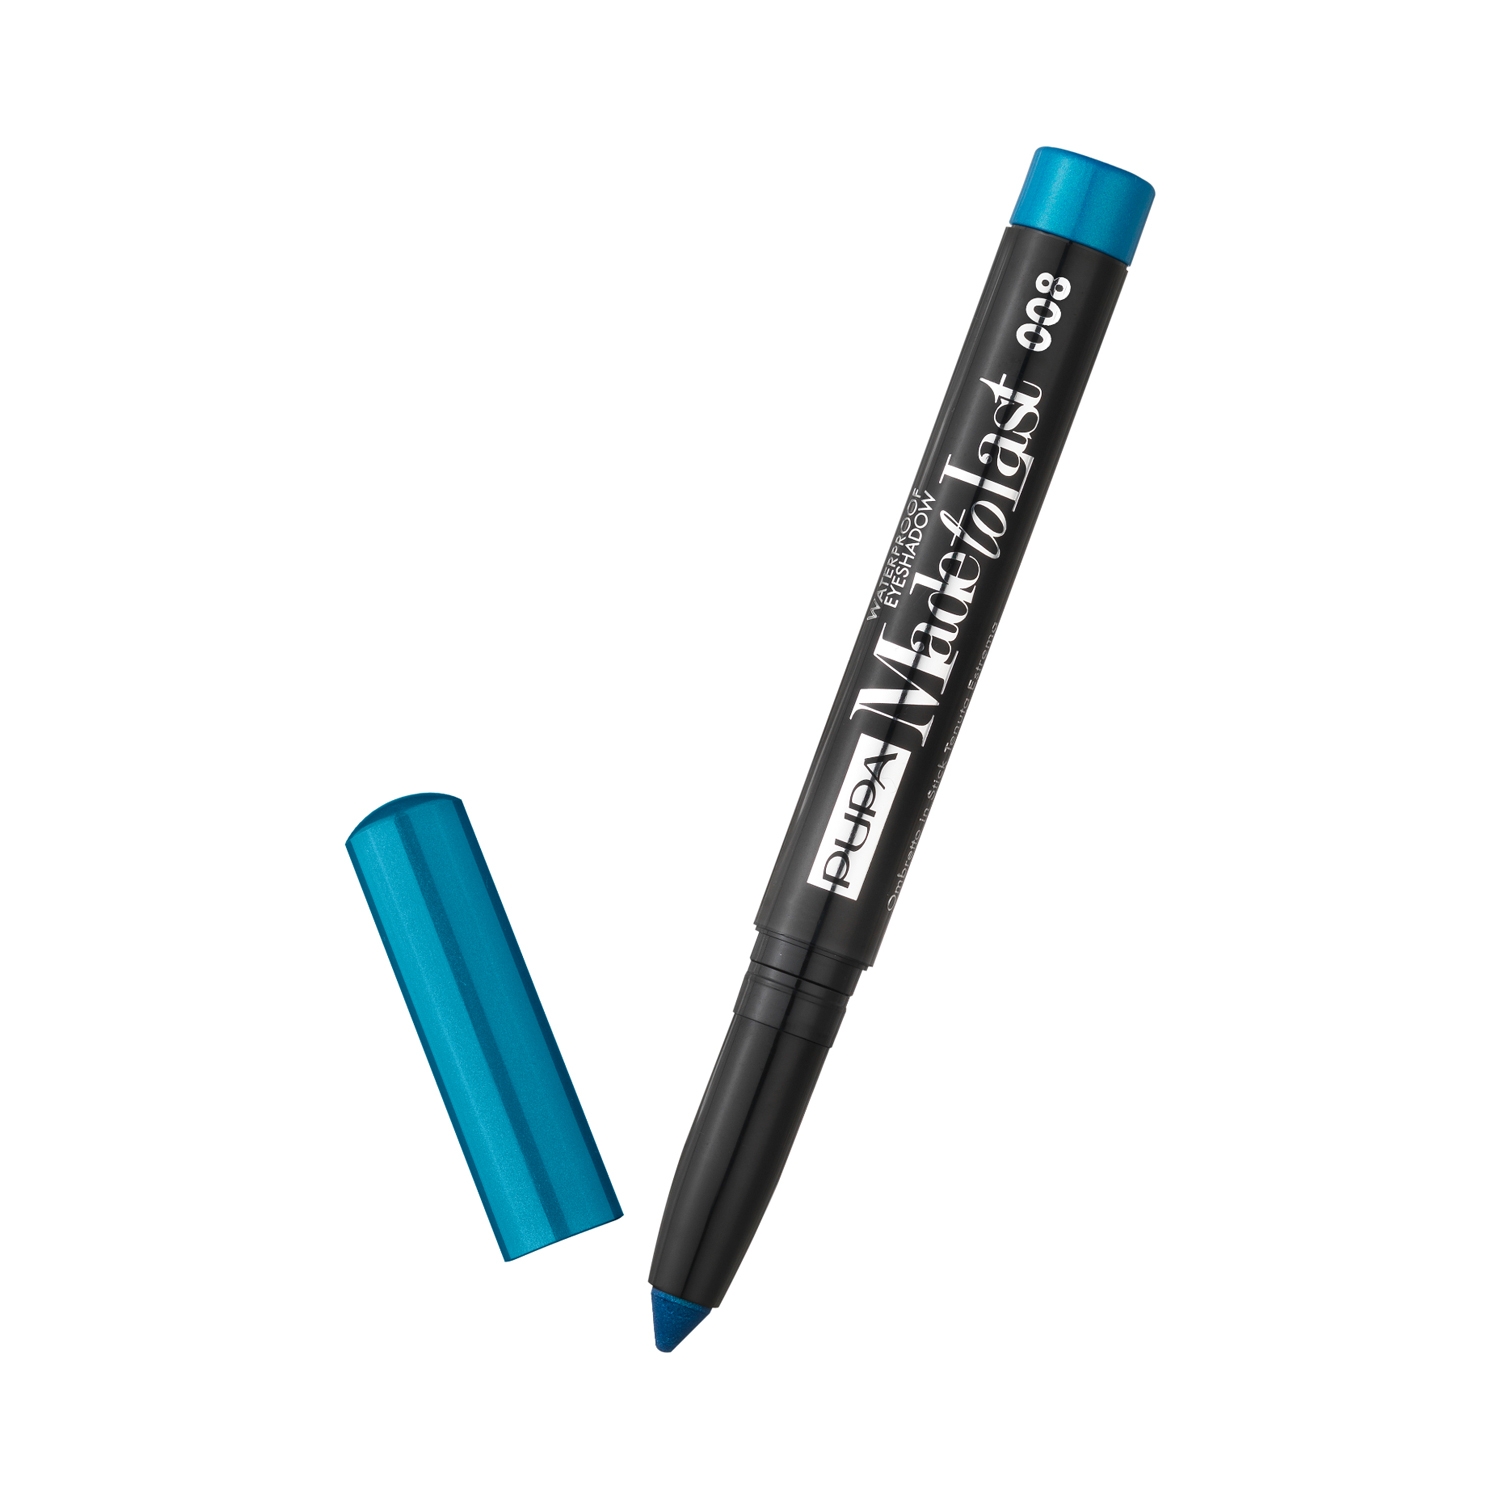 Pupa Milano | Pupa Milano Made To Last Waterproof Long Lasting Stick Eyeshadow - 008 Pool Blue (1.4g)